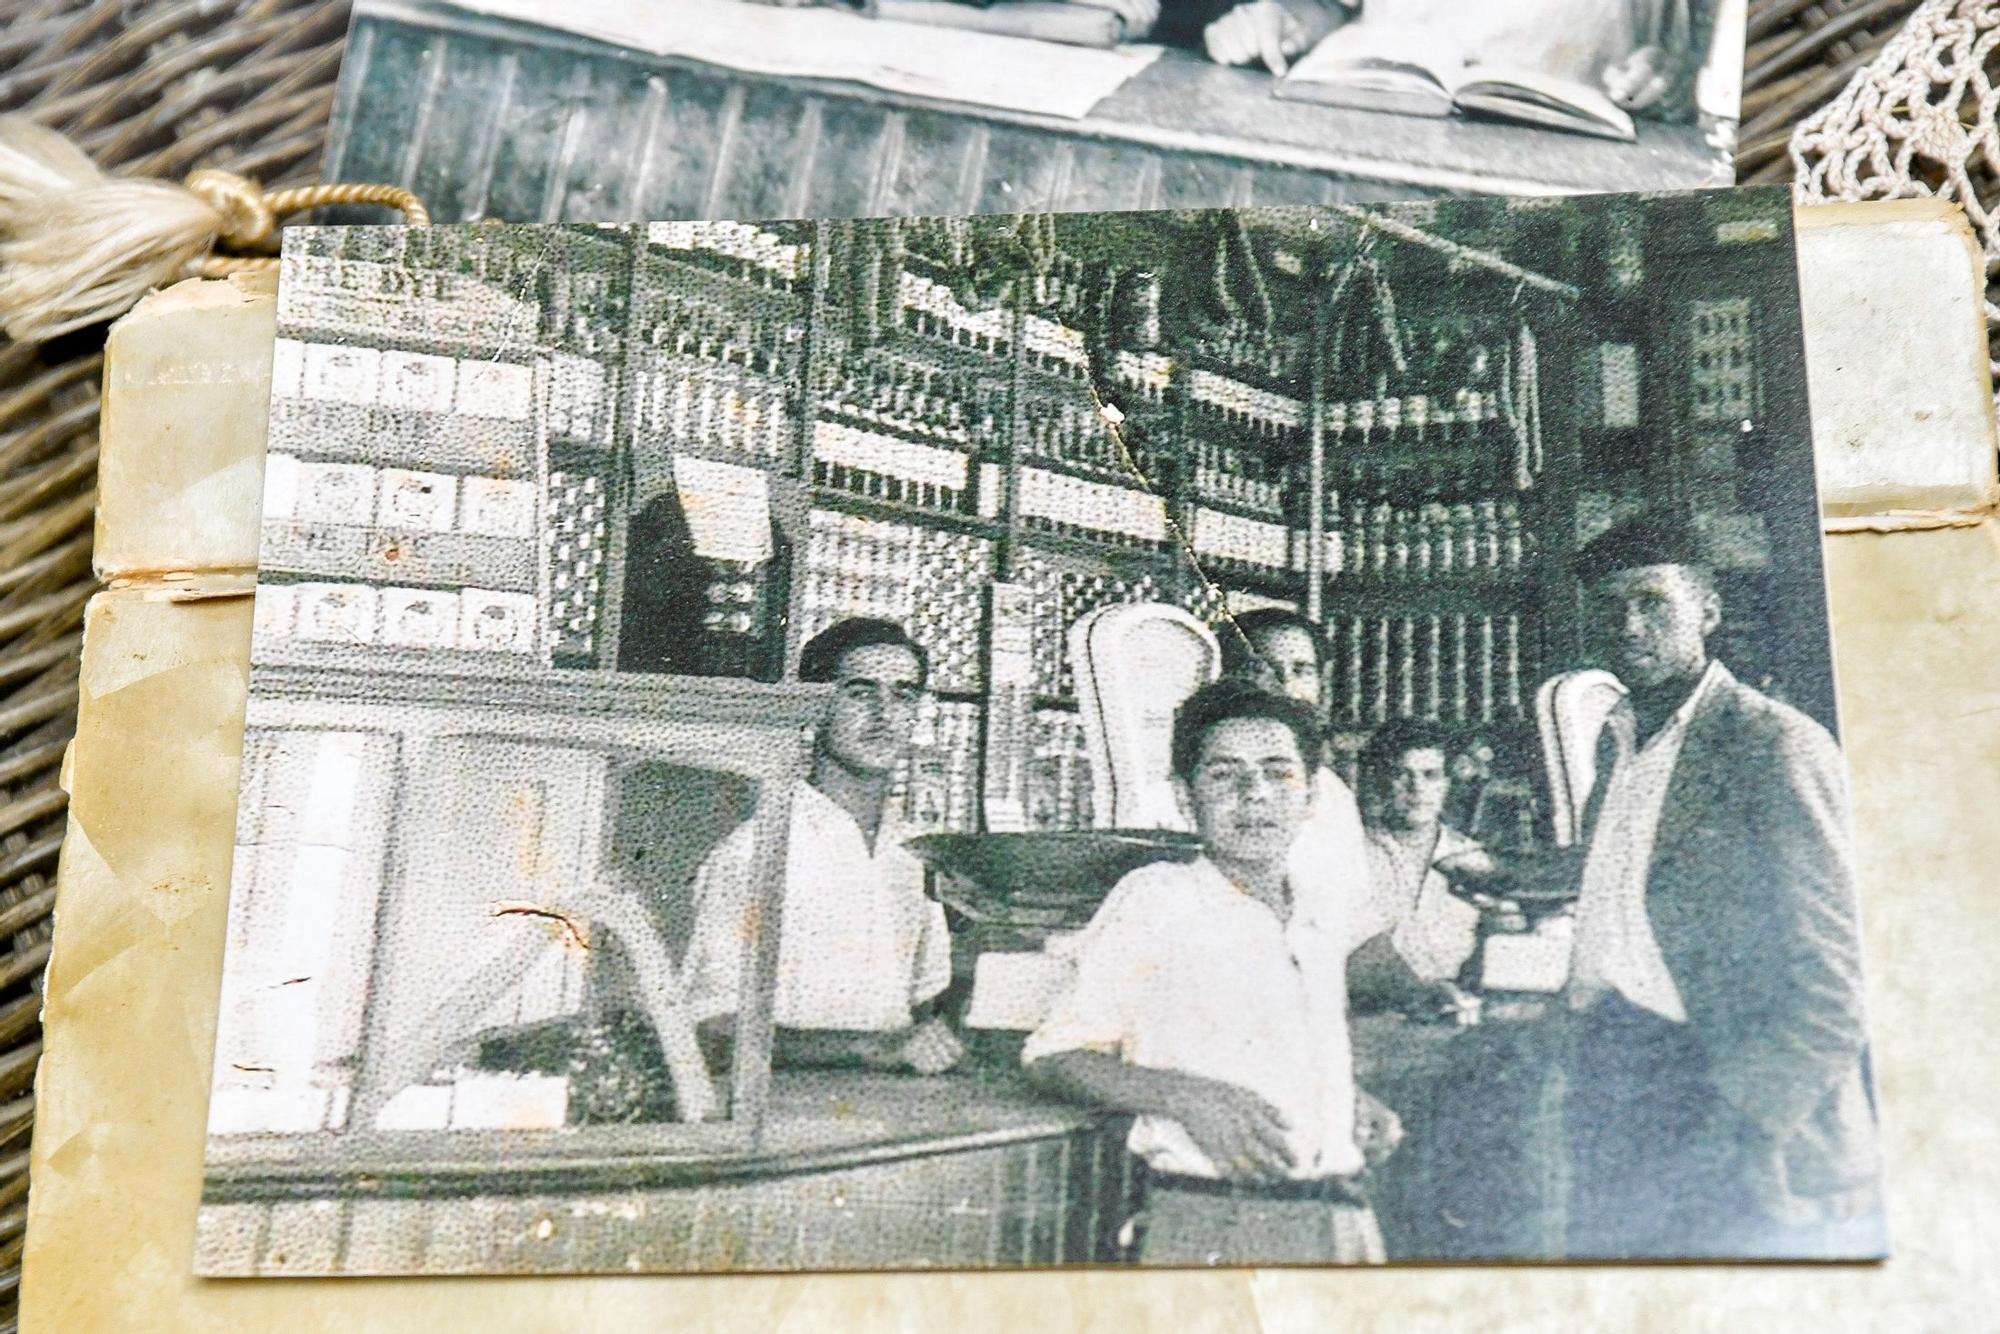  Bar San Fernando, en Guanarteme